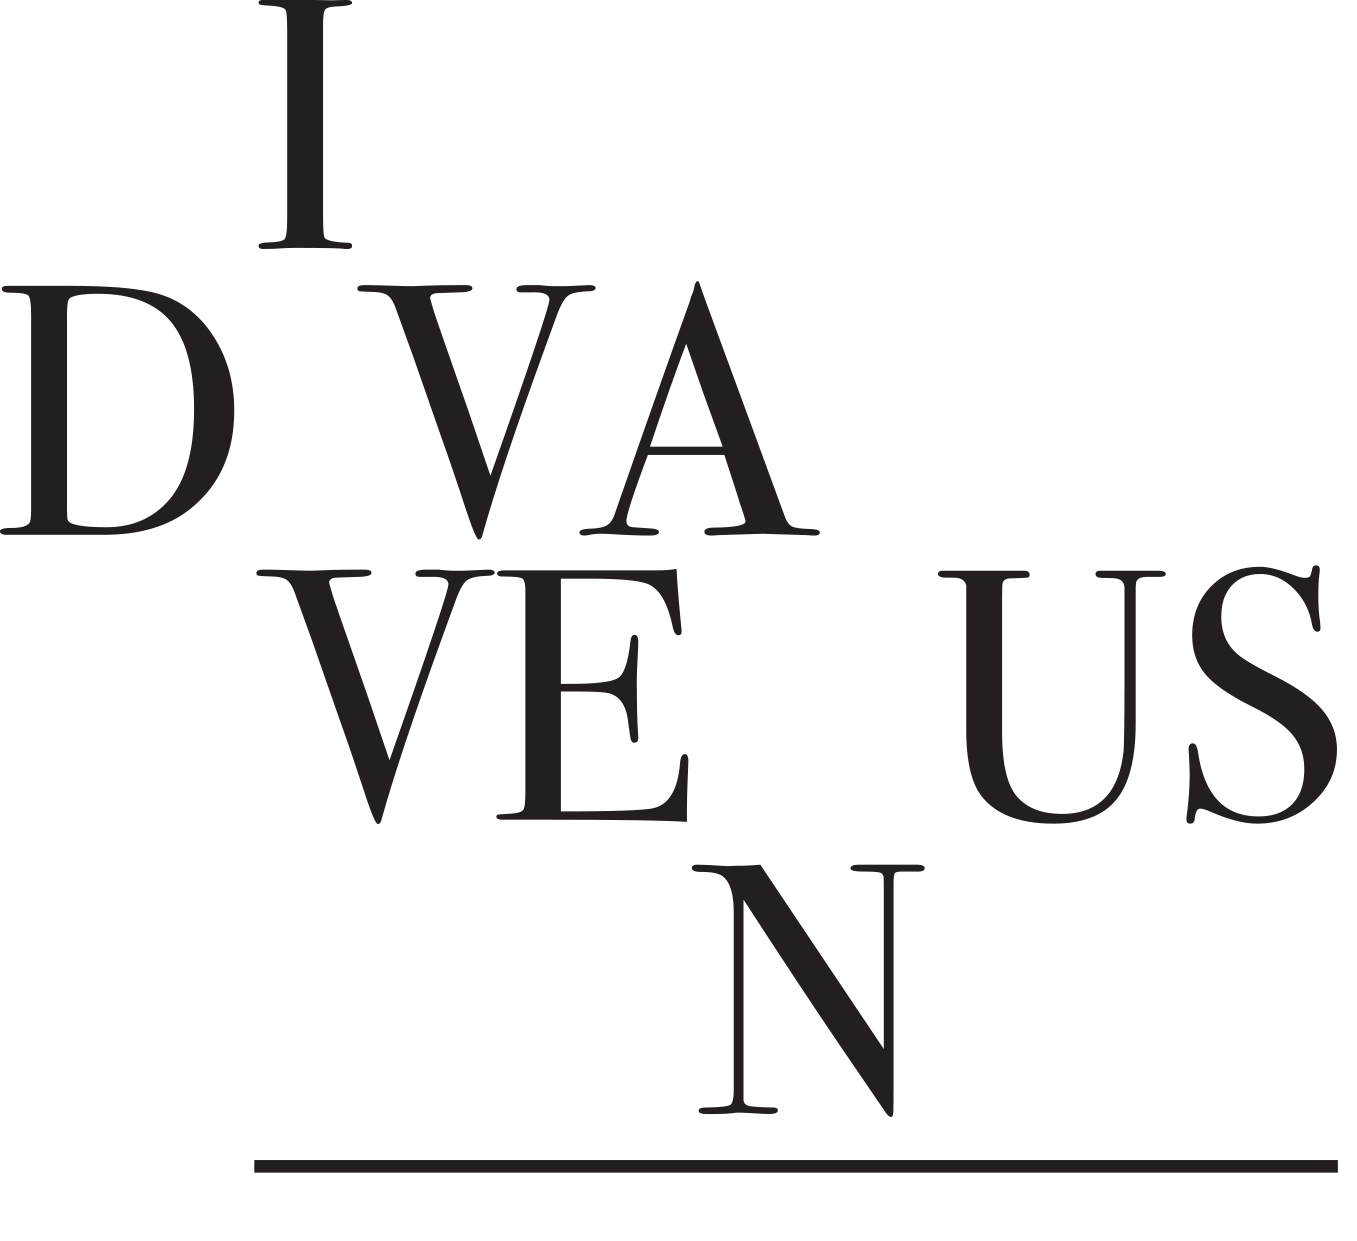 divavenus_victoriatorlonia-1-1.png